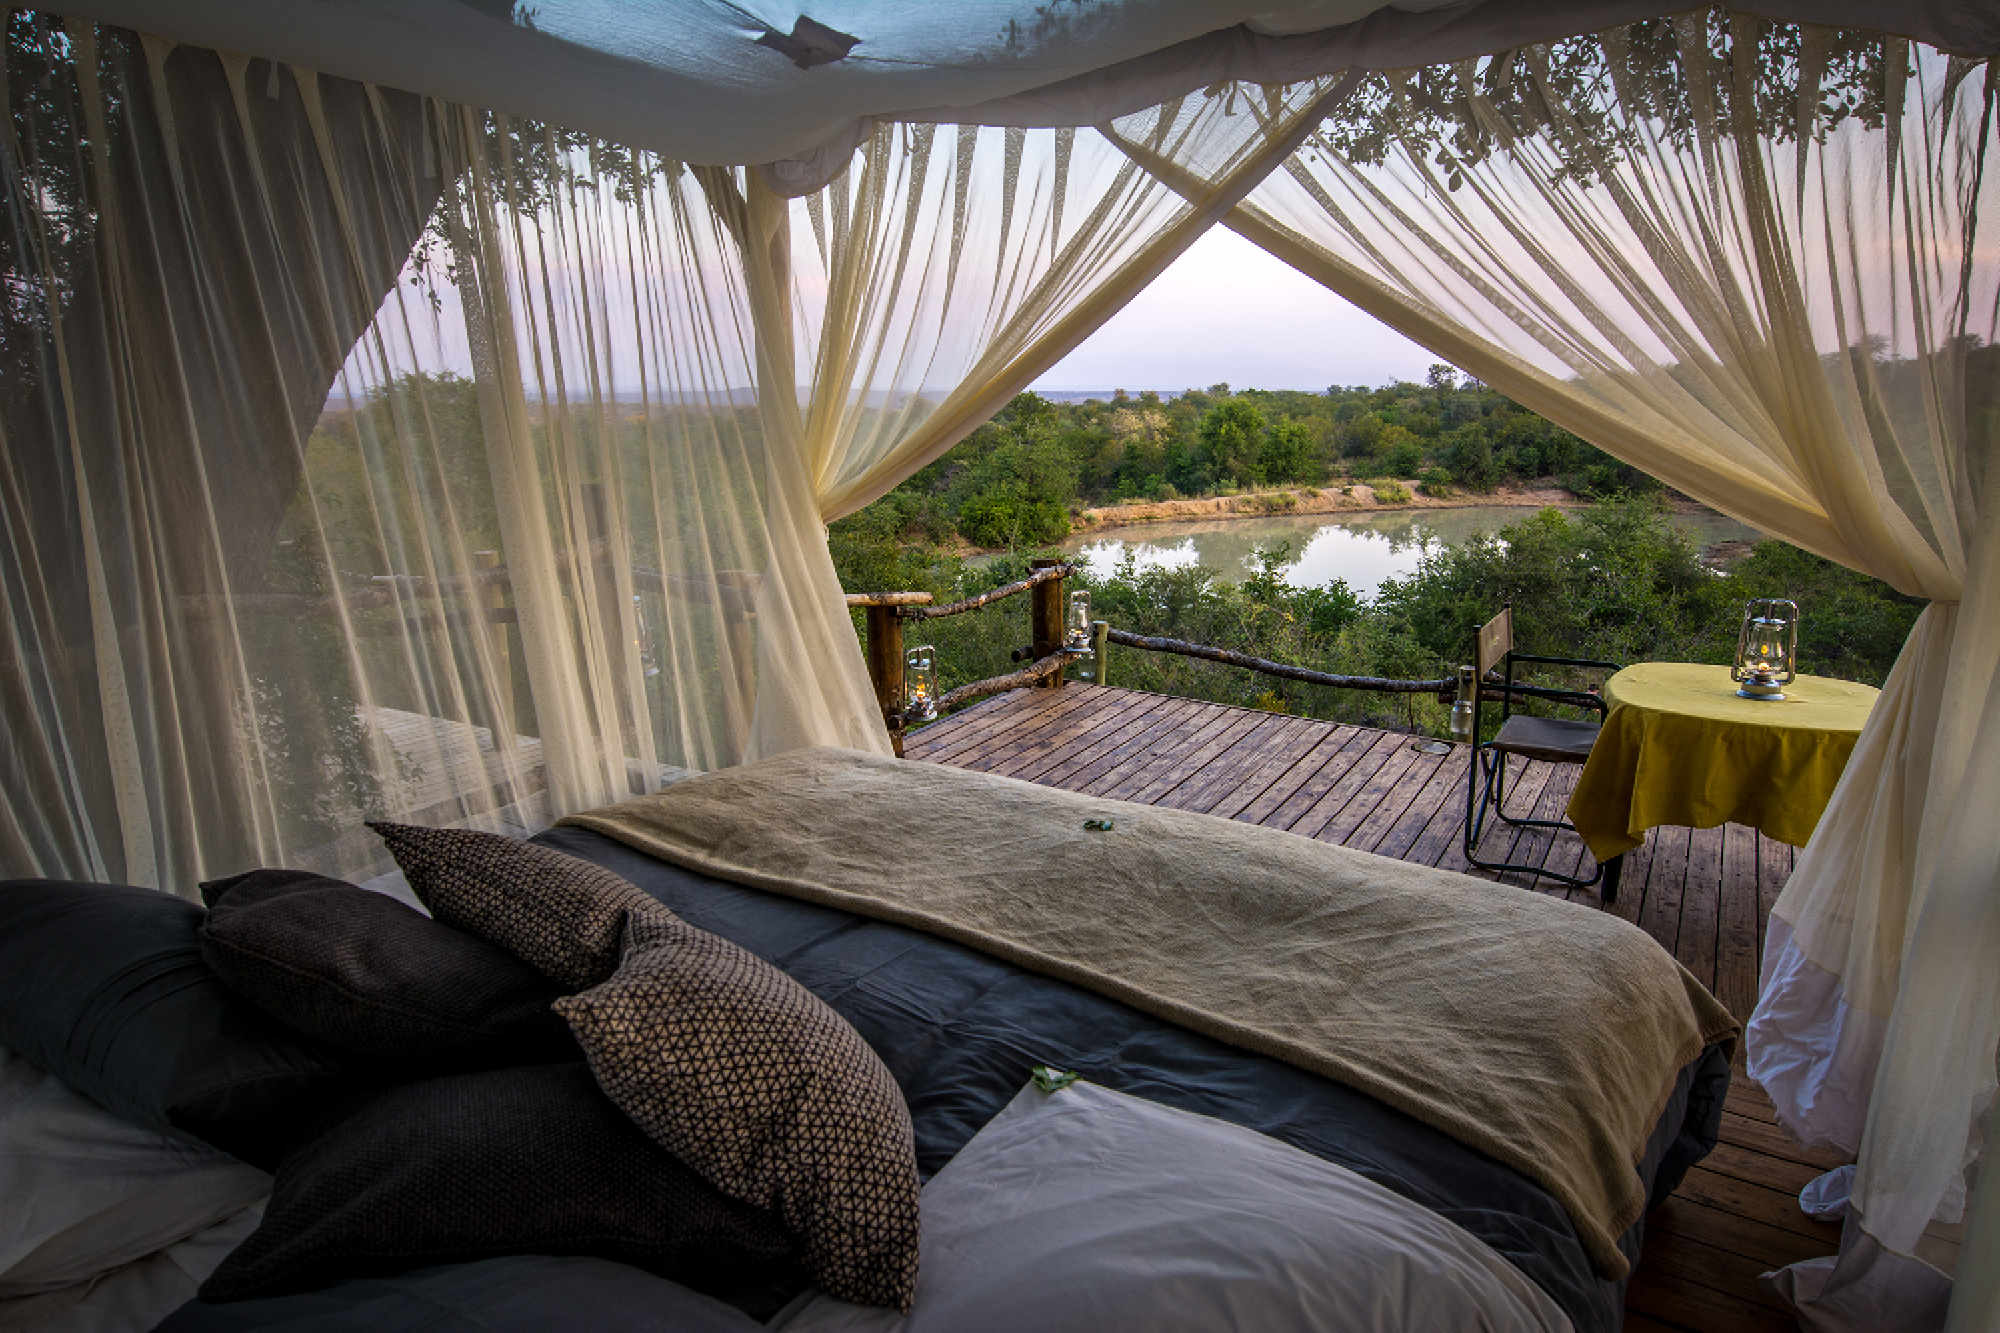 Garonga's sleep deck in the middle of the bush